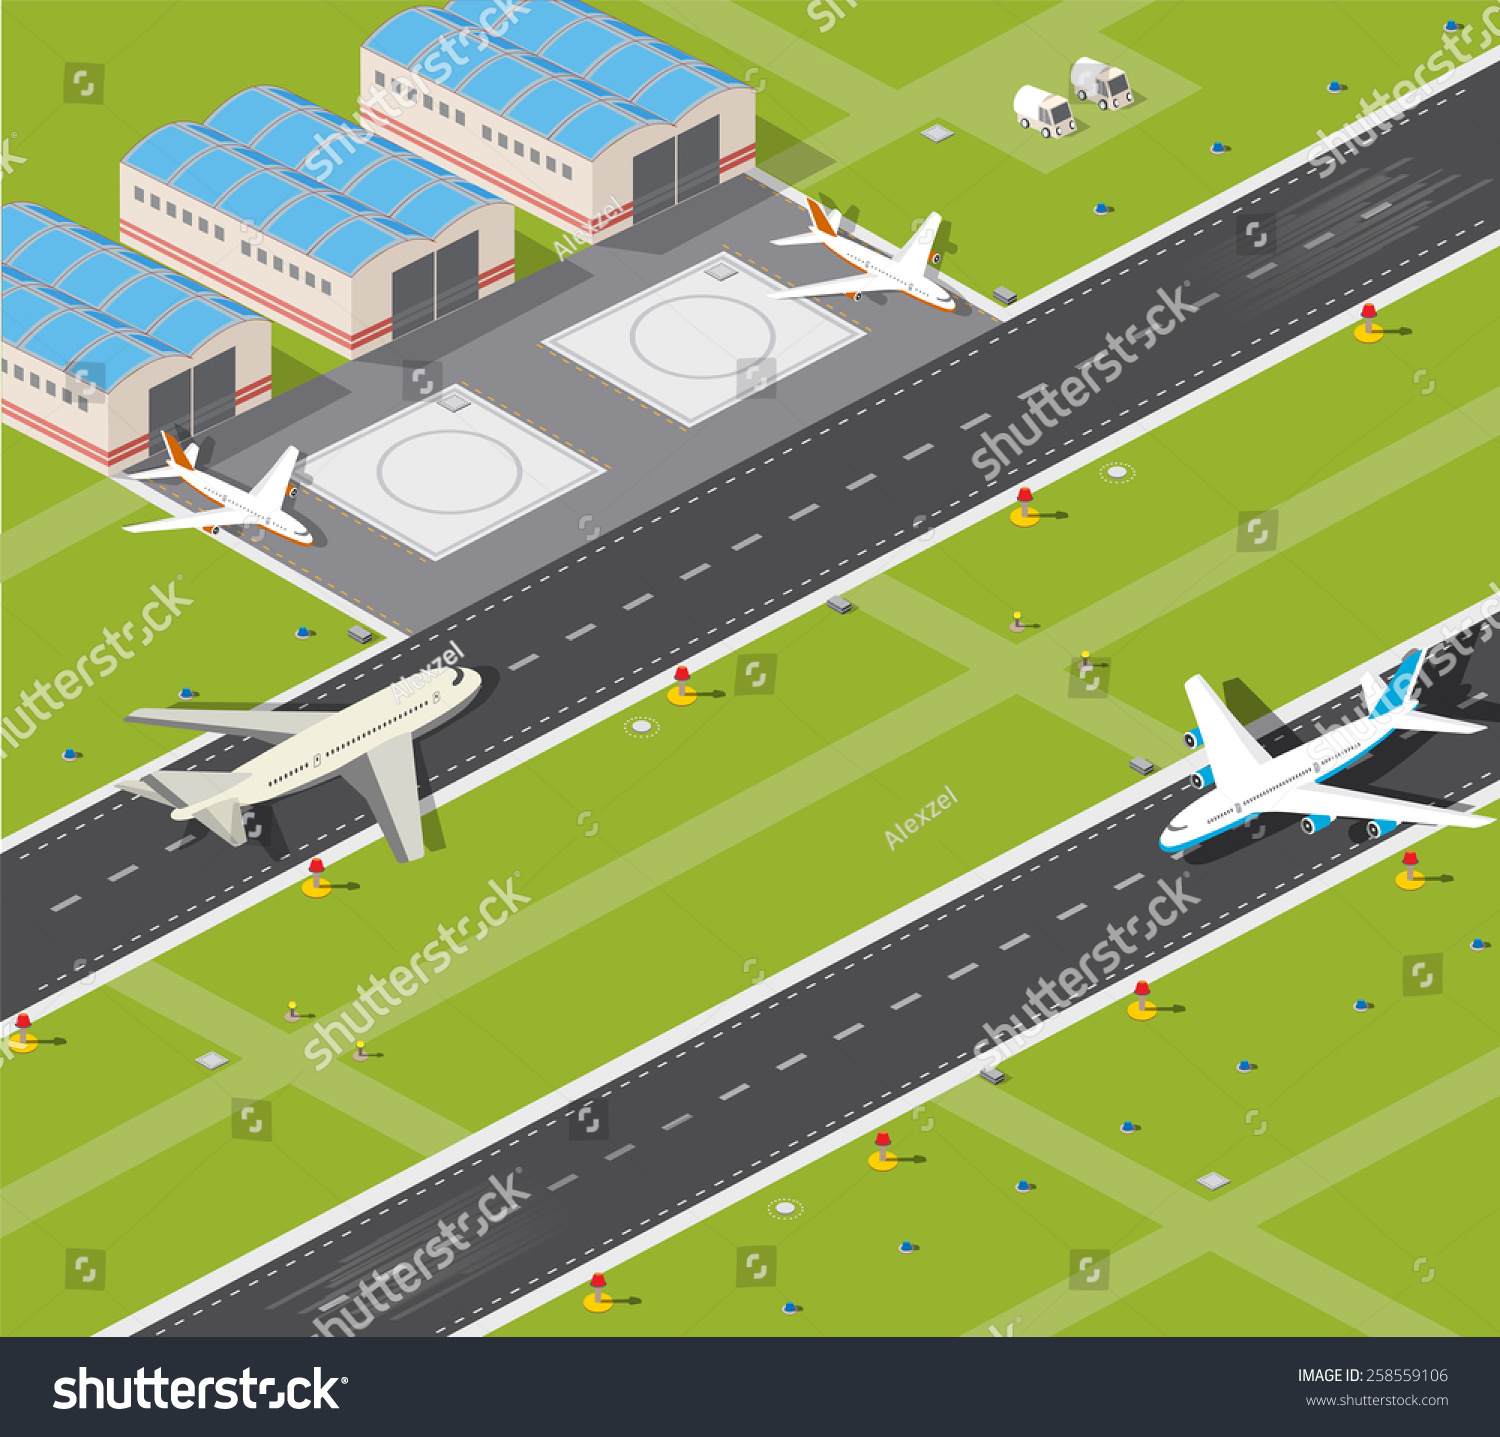 clipart airport runway - photo #21